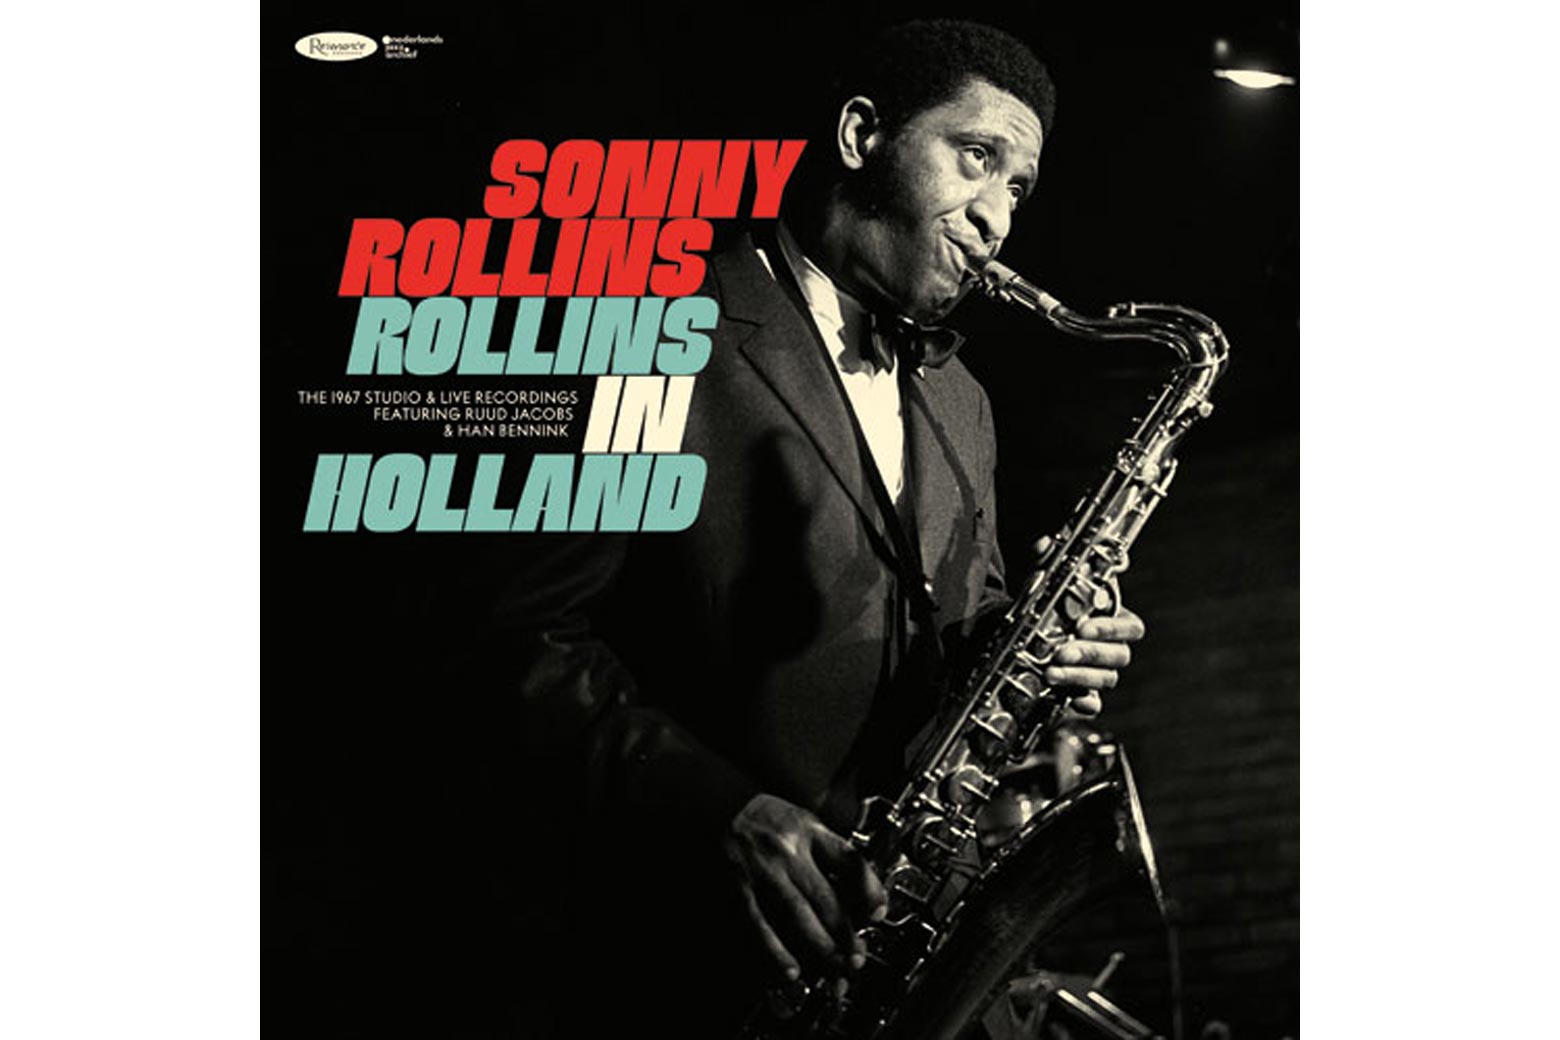 Rollins in Holland album cover